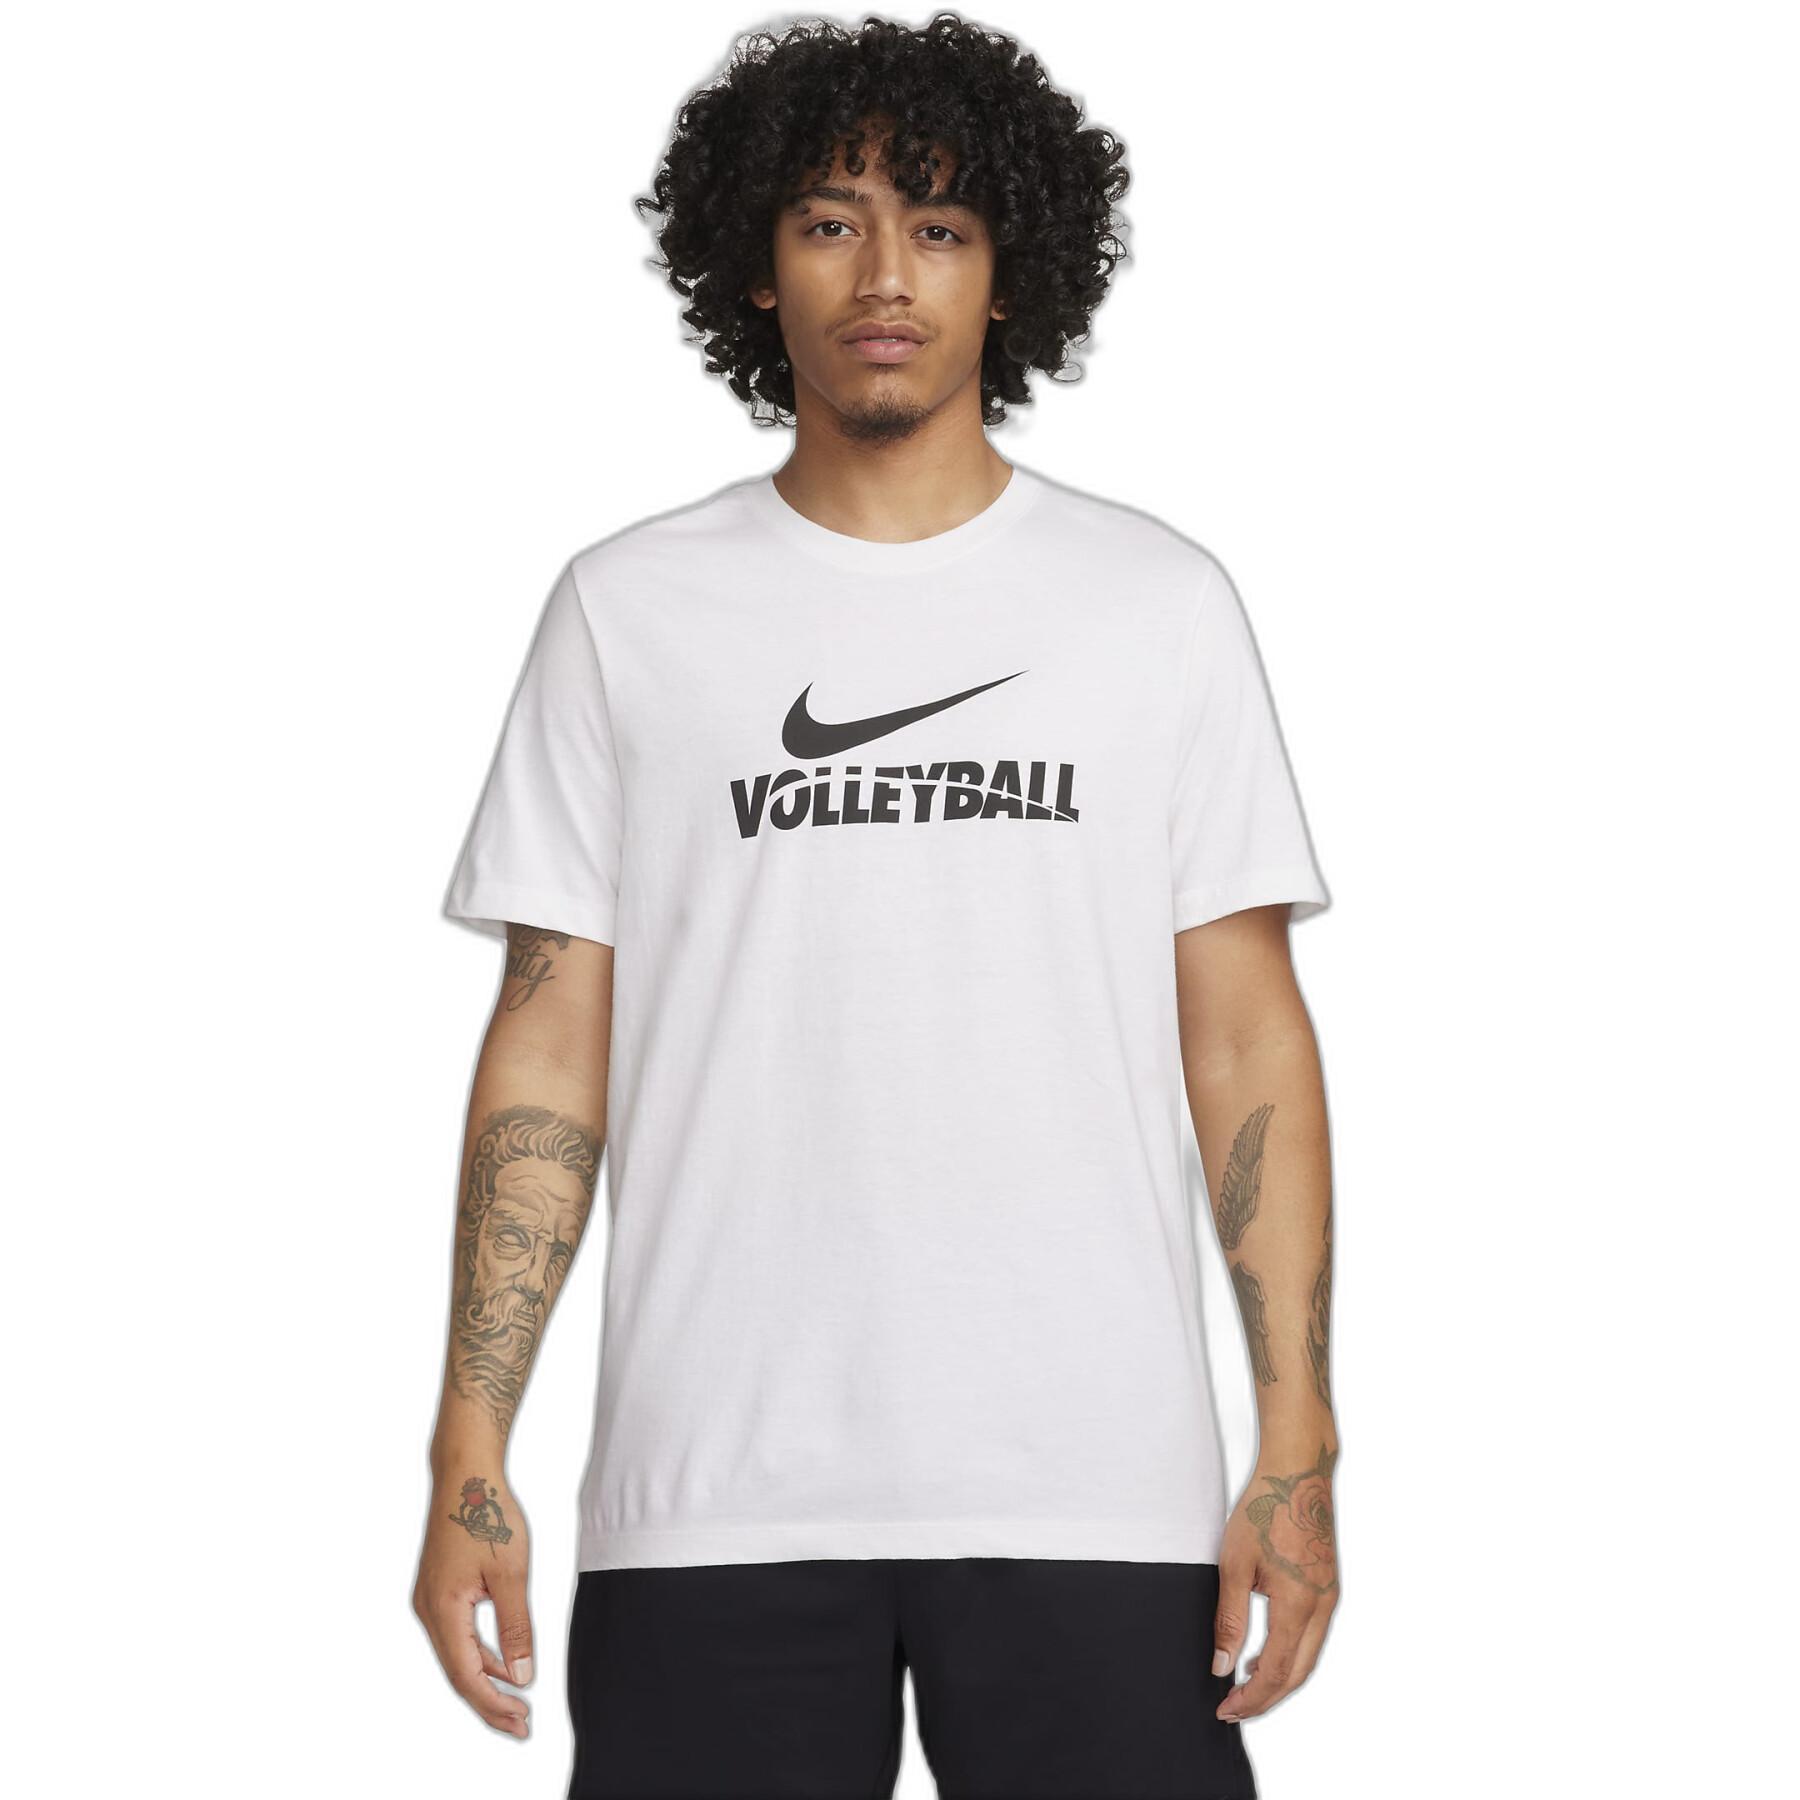 T-Shirt Frau Nike Volleyball WM